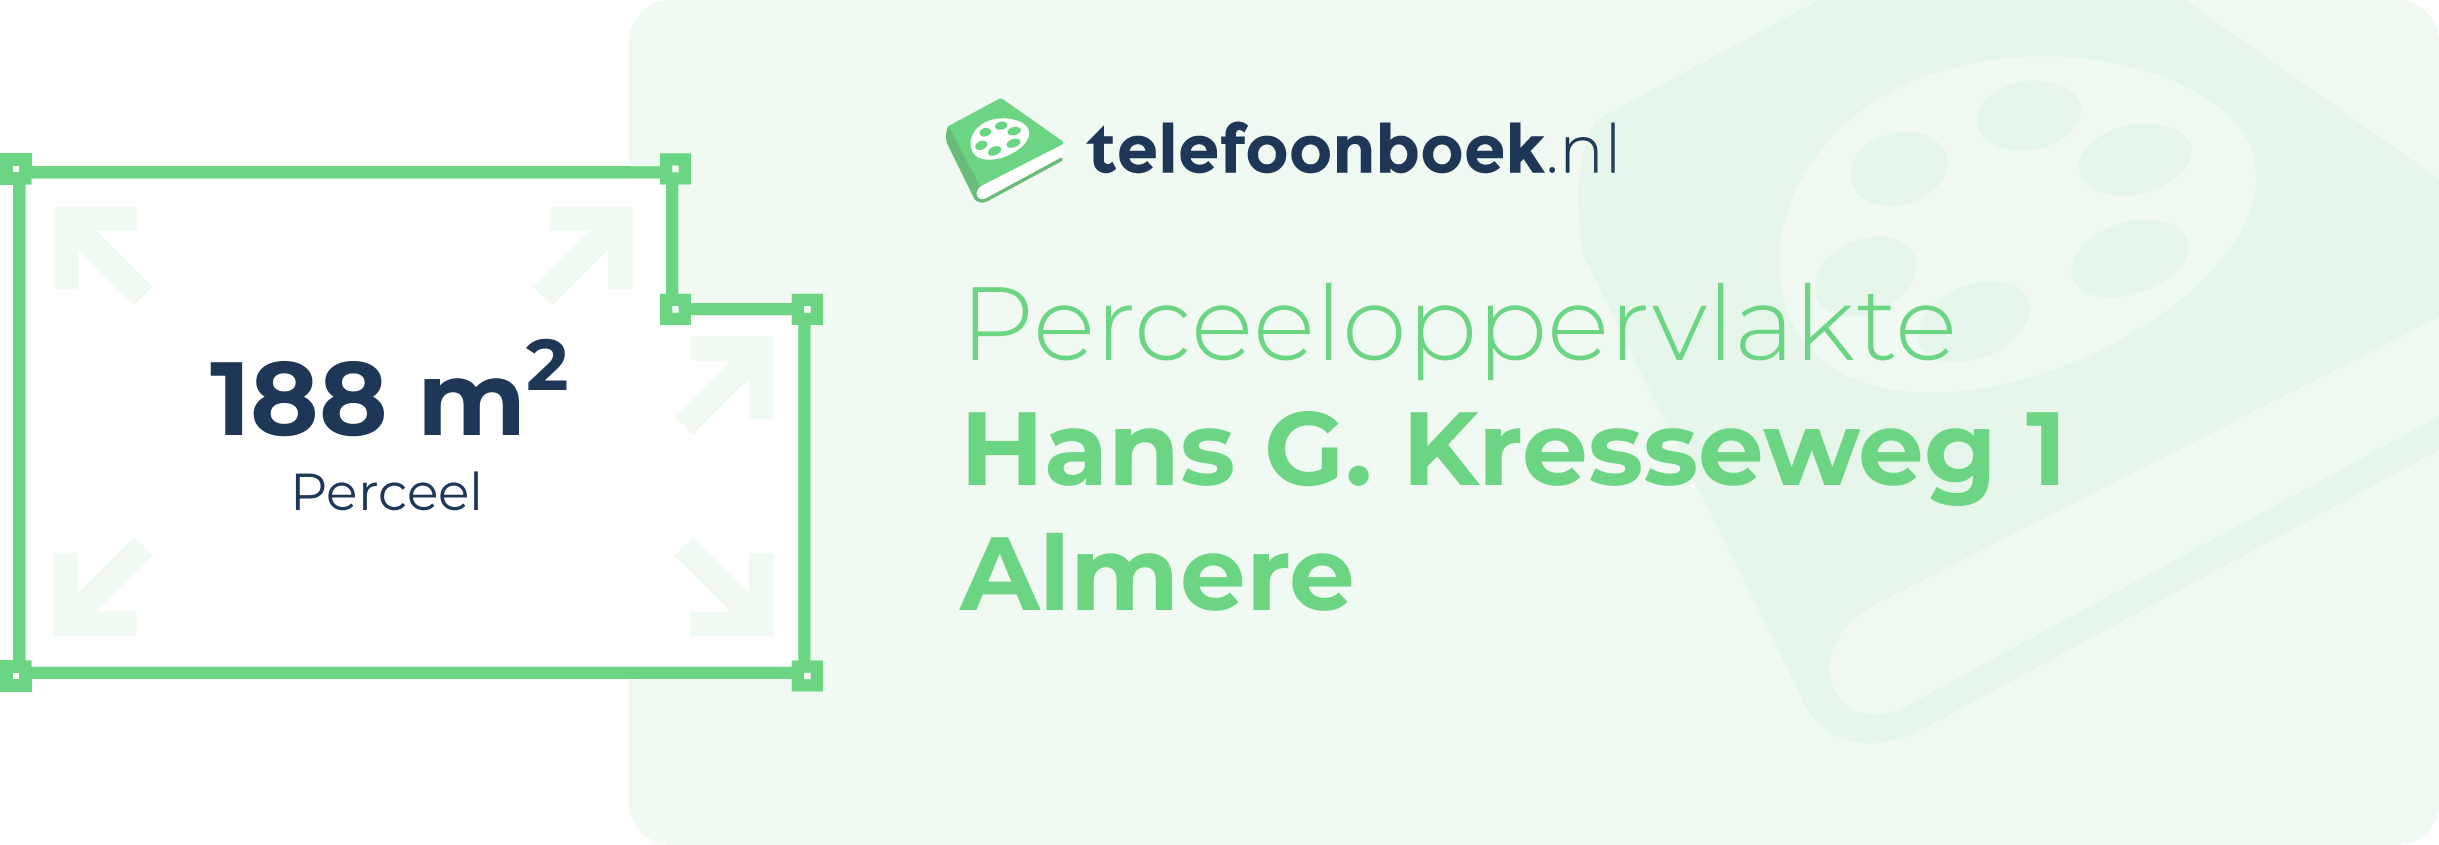 Perceeloppervlakte Hans G. Kresseweg 1 Almere